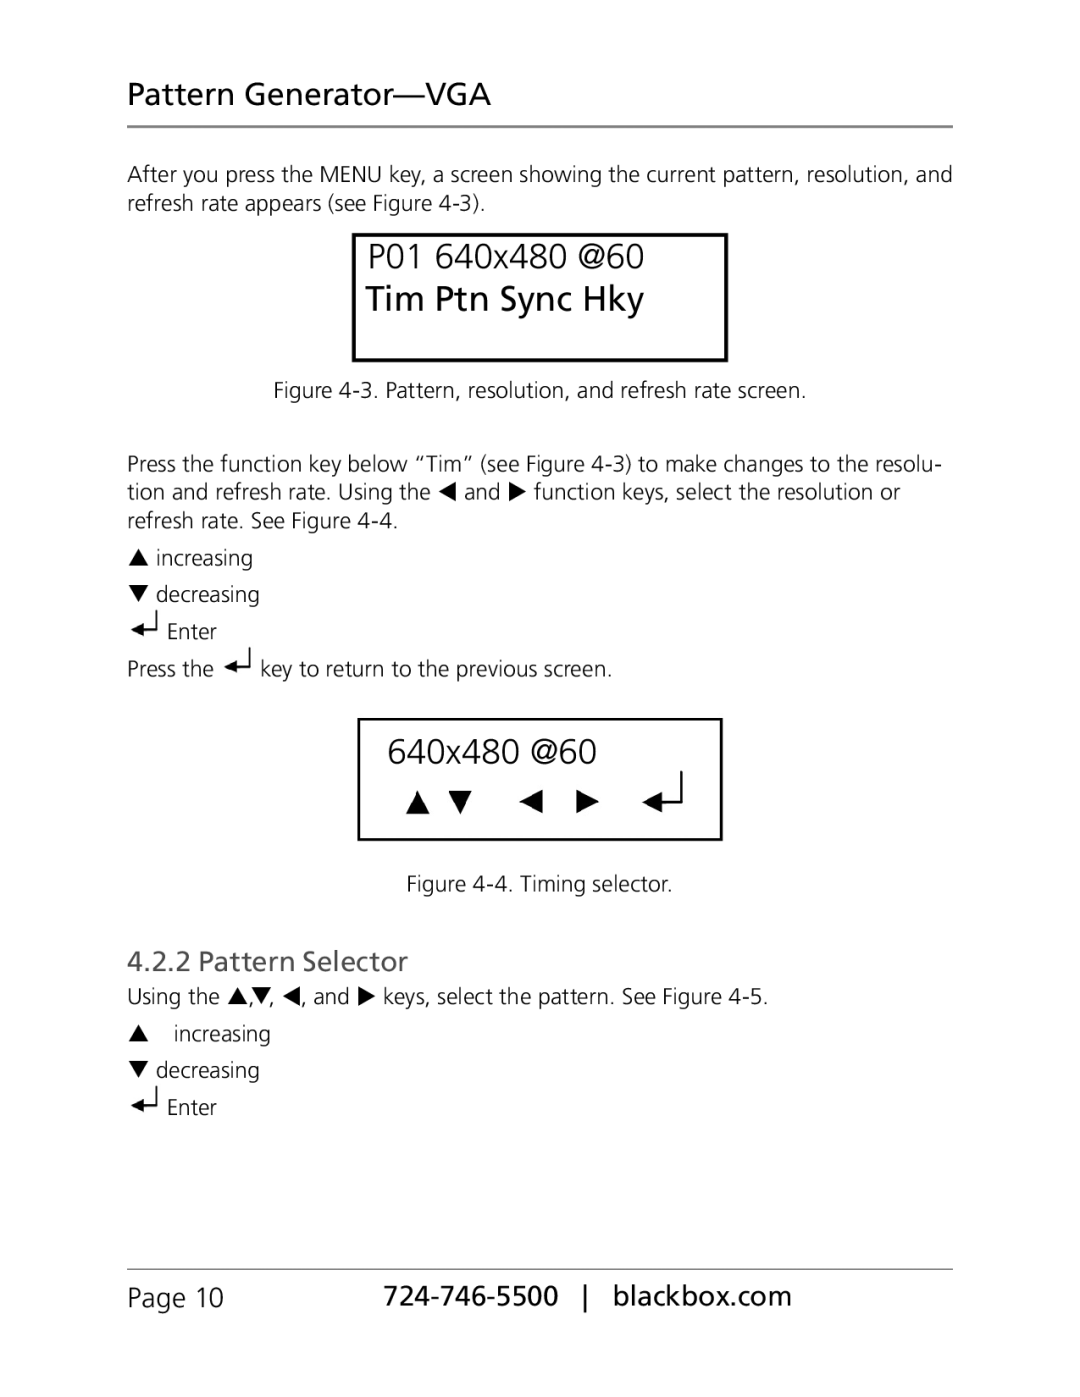 Black Box PG-VGA manual P01 640x480 @60 Tim Ptn Sync Hky, Pattern Selector, Pattern Generator-VGA, Page 